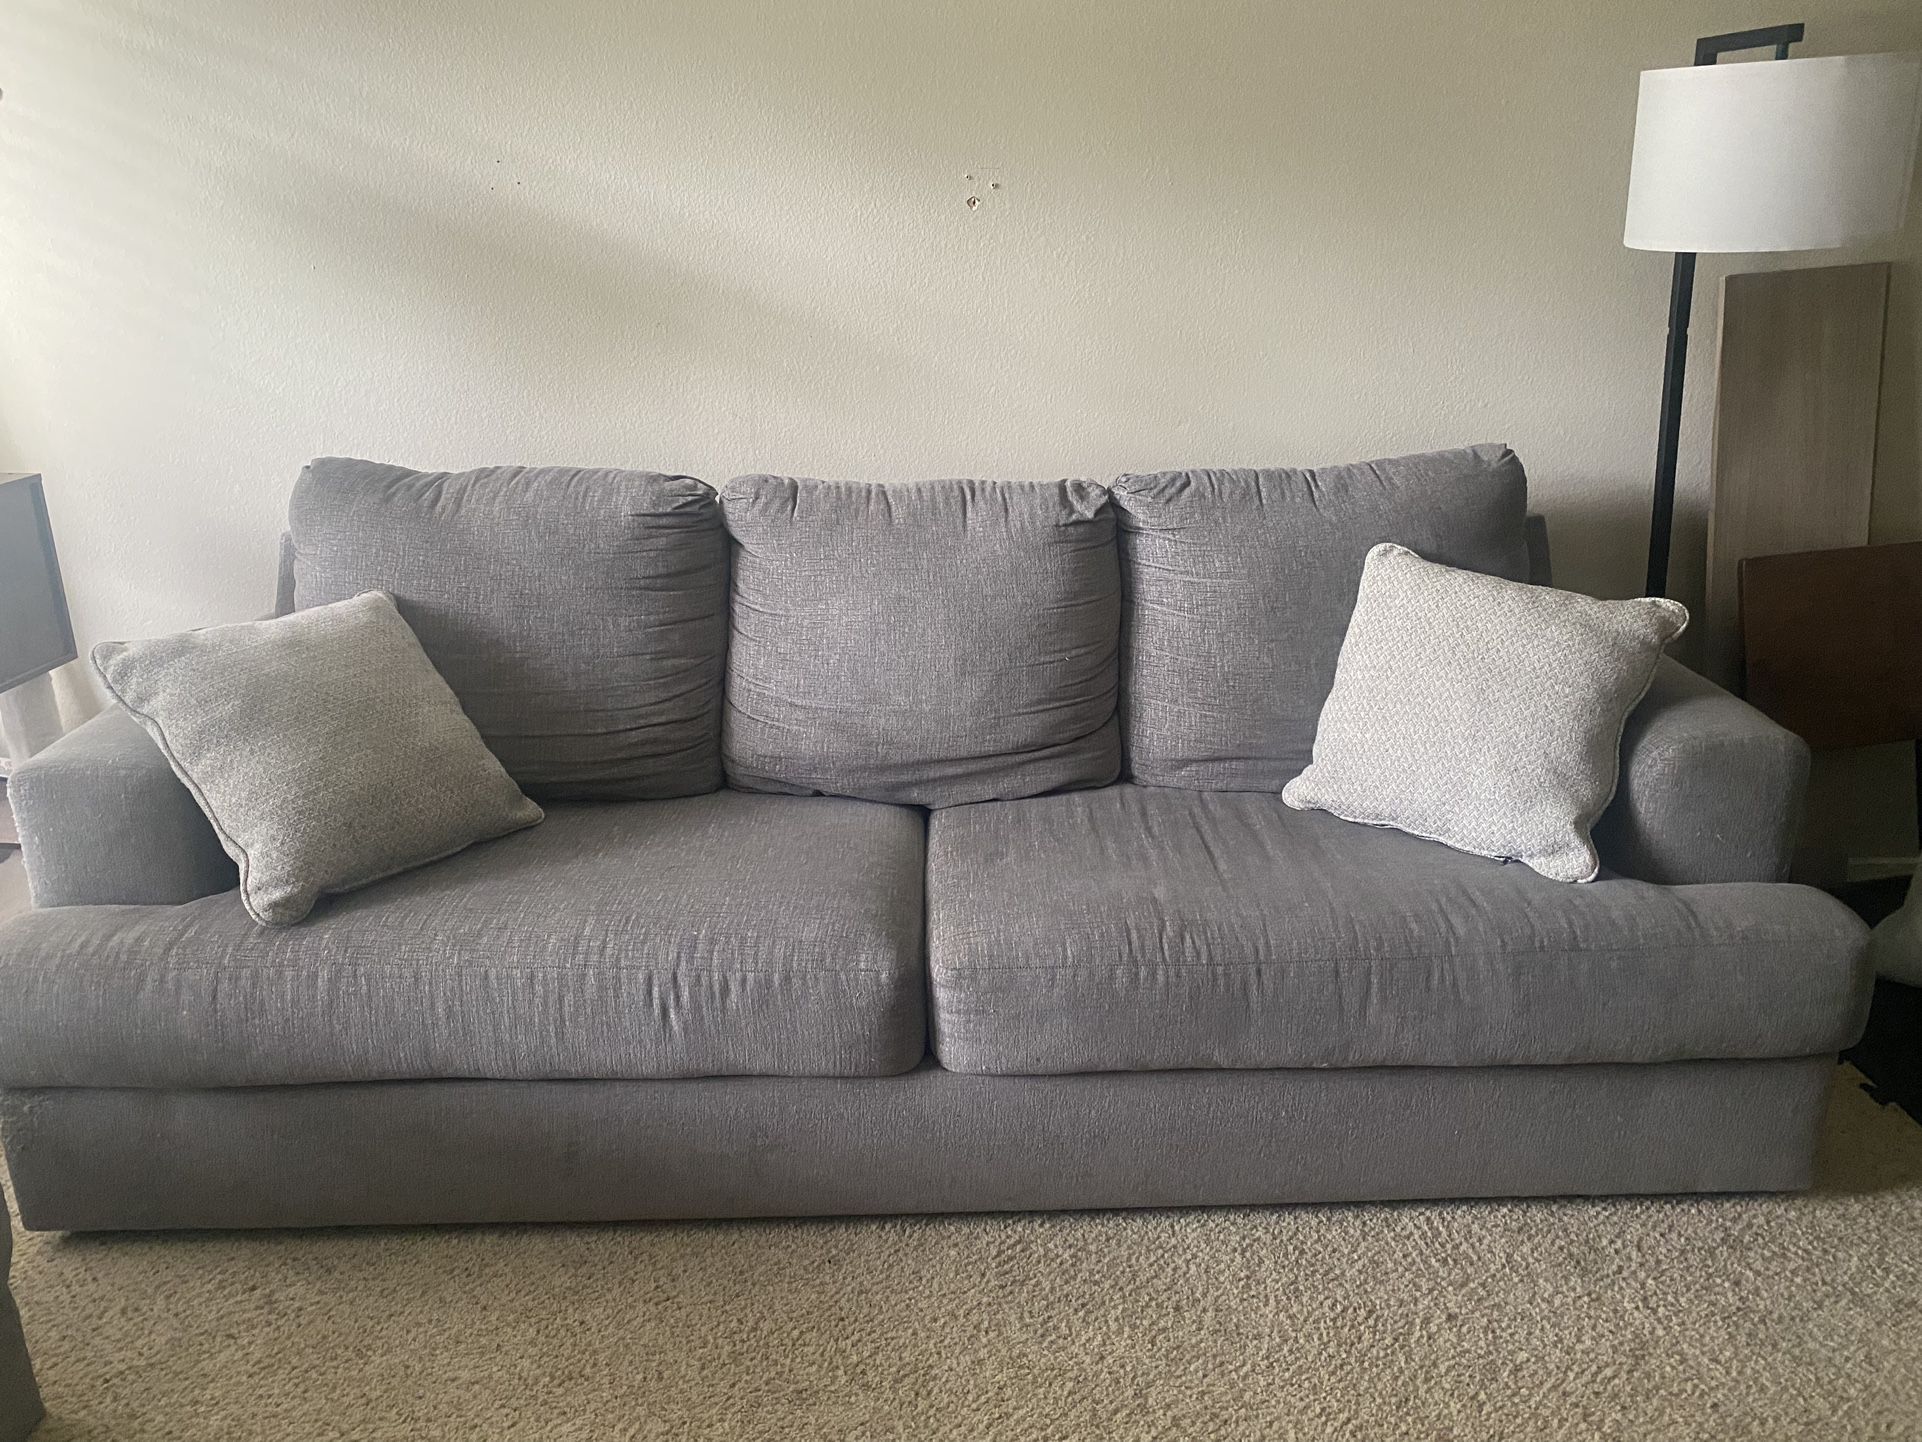 8’ Cozy Sofa With Queen Bed